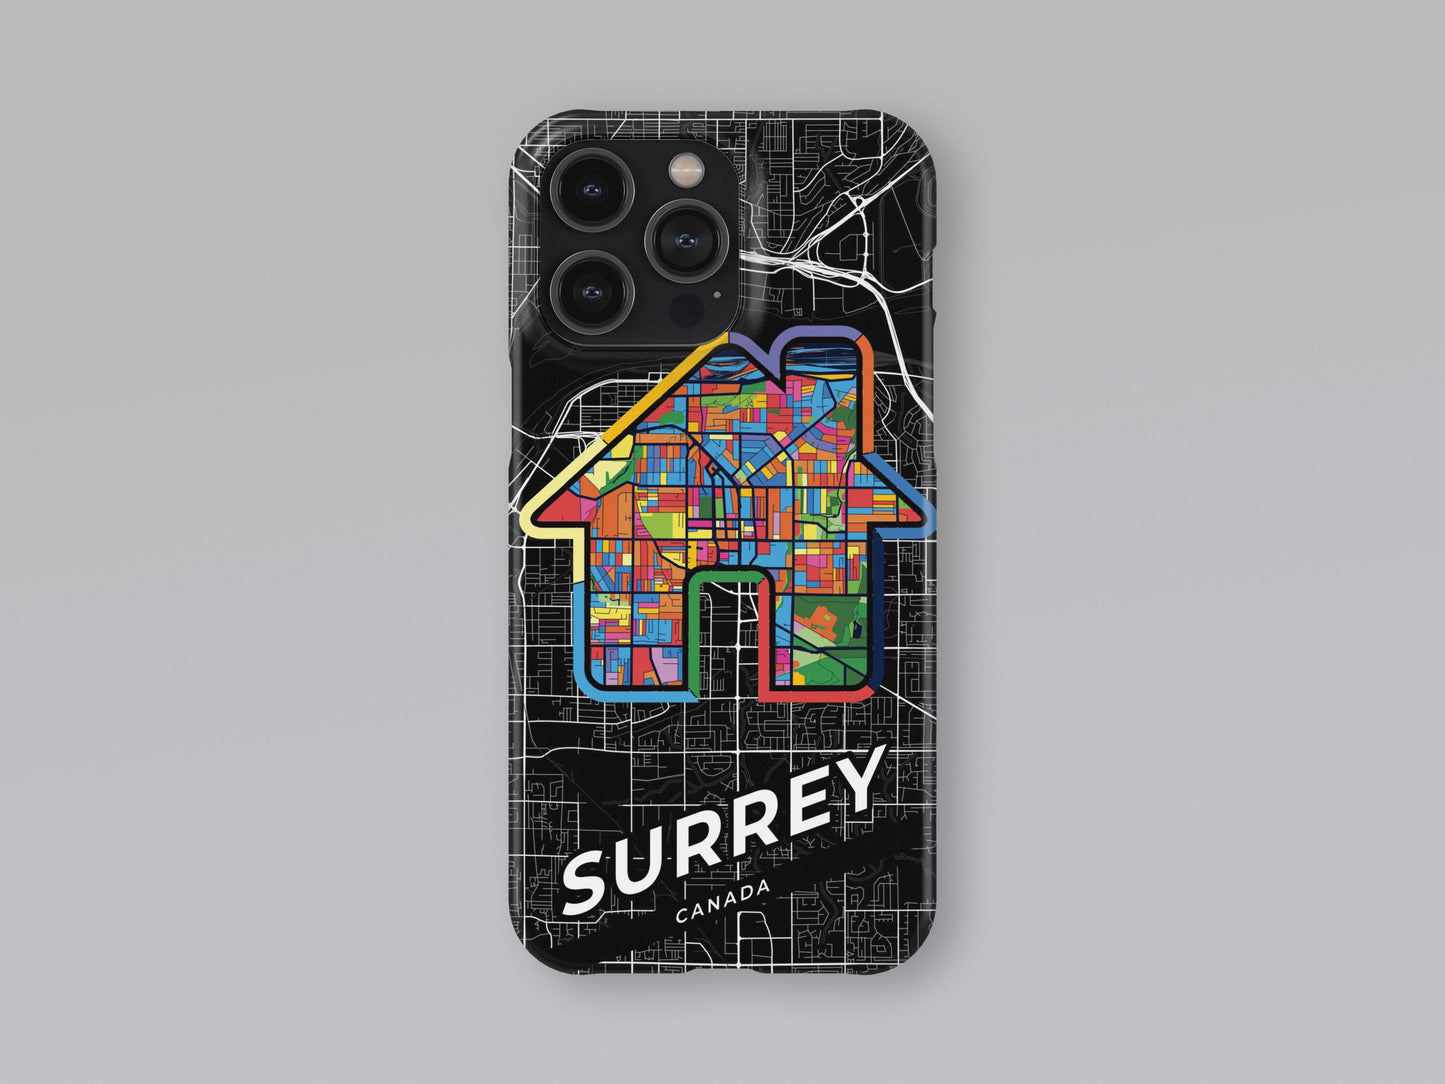 Surrey Canada slim phone case with colorful icon 3